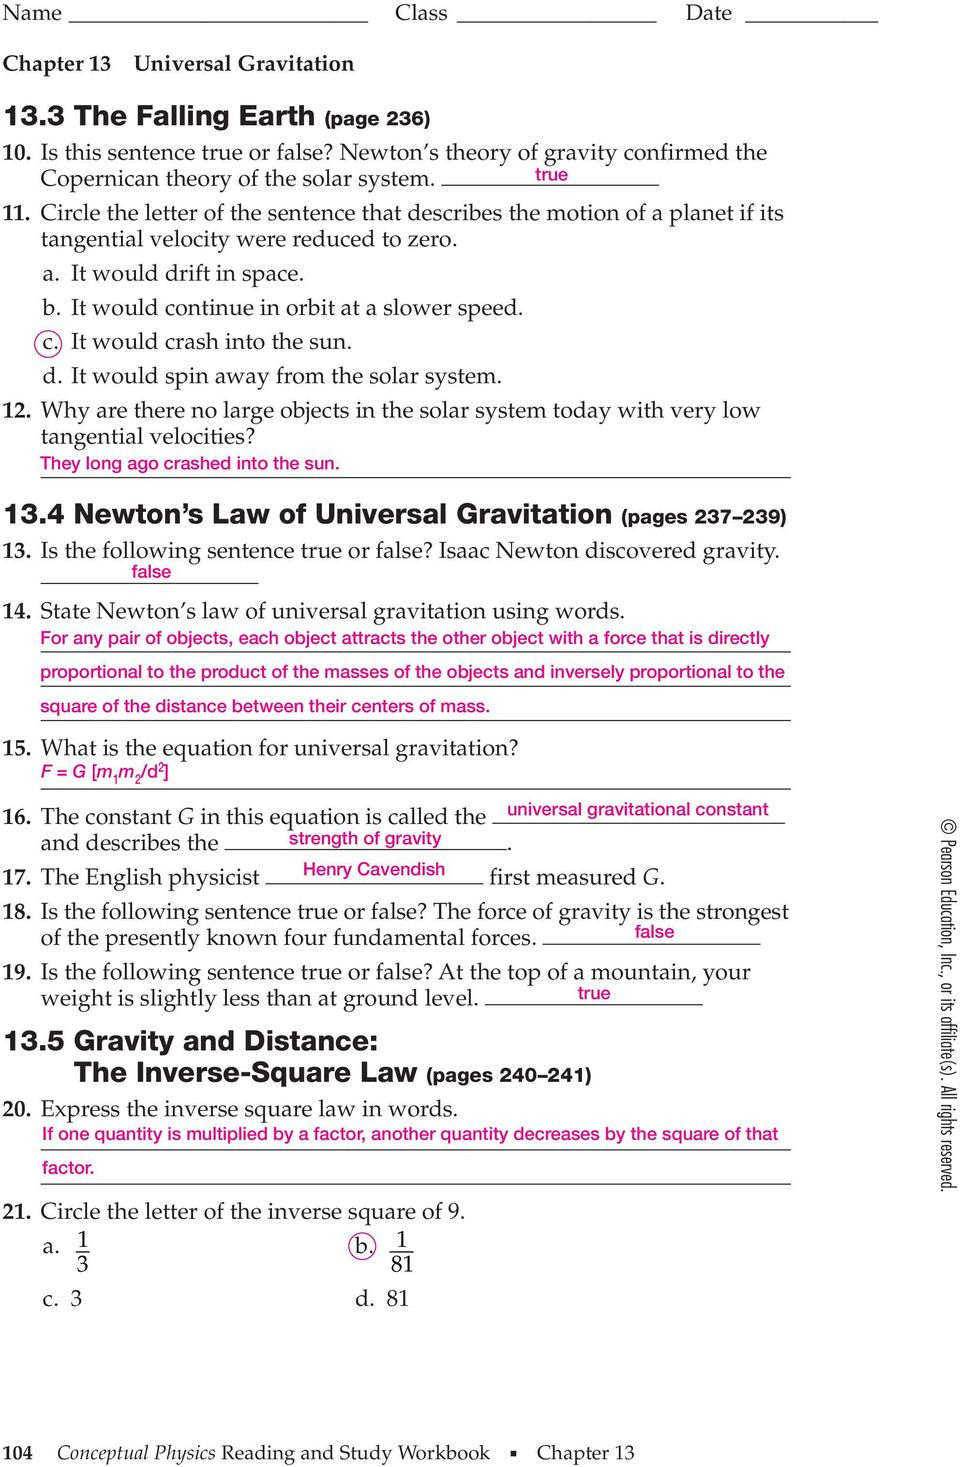 Universal Gravitation Worksheet Answers